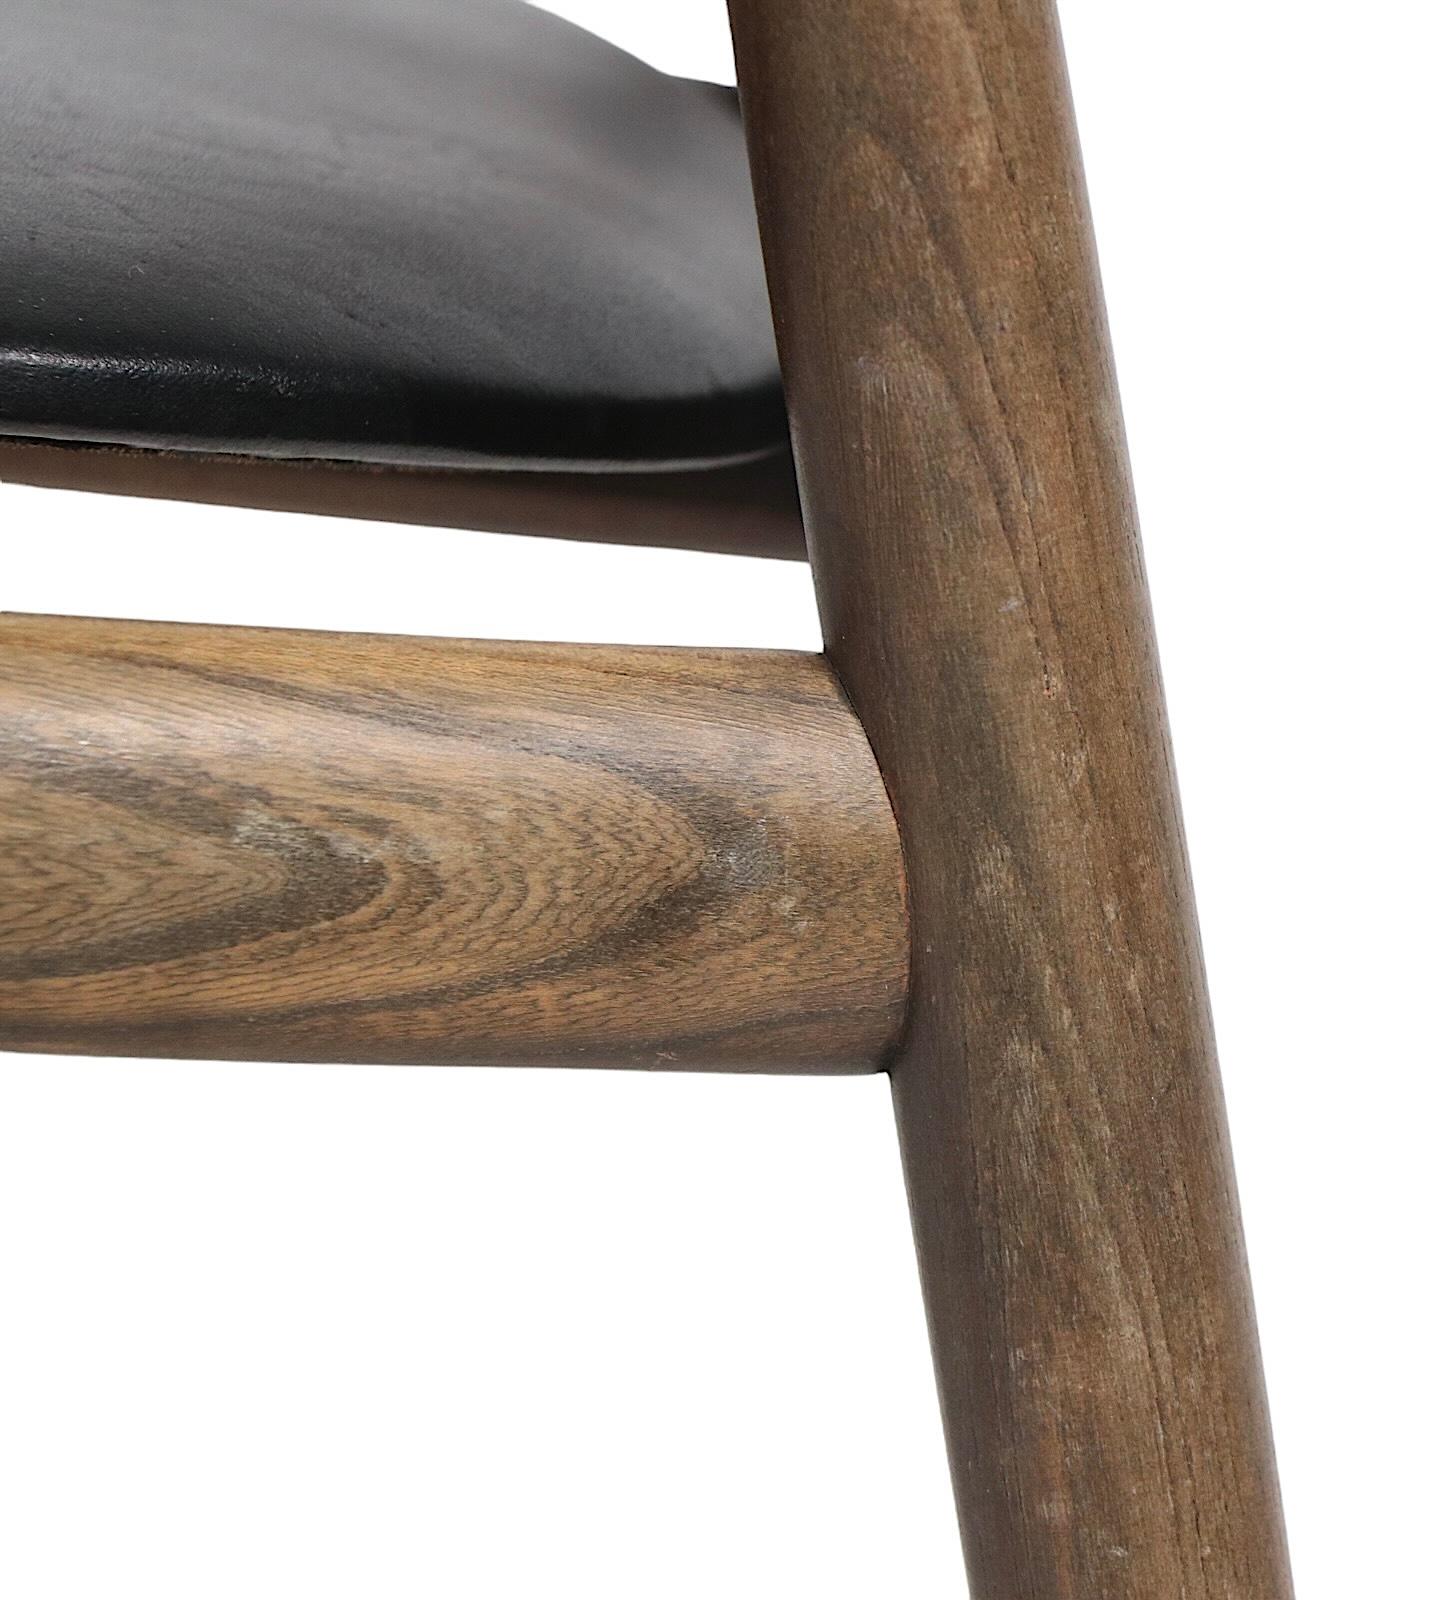  Pr. Illum Wikkelso Design Niels Eilersen Made Danish Mid Century  Dining Chairs For Sale 3